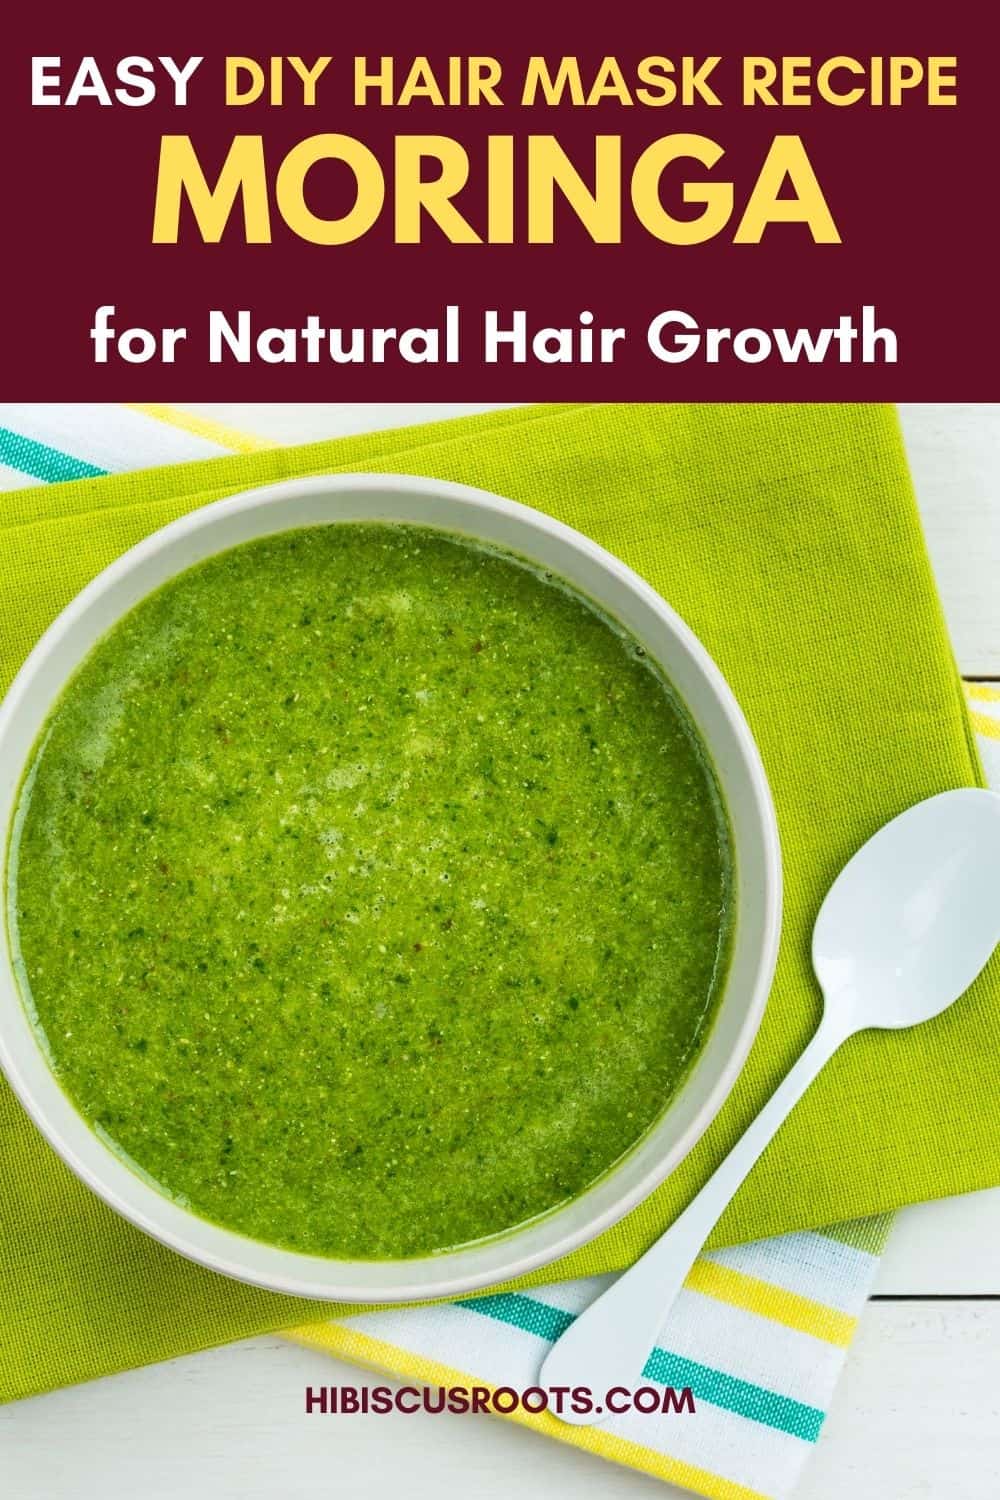 Moringa Powder and its Benefits for Hair Growth!